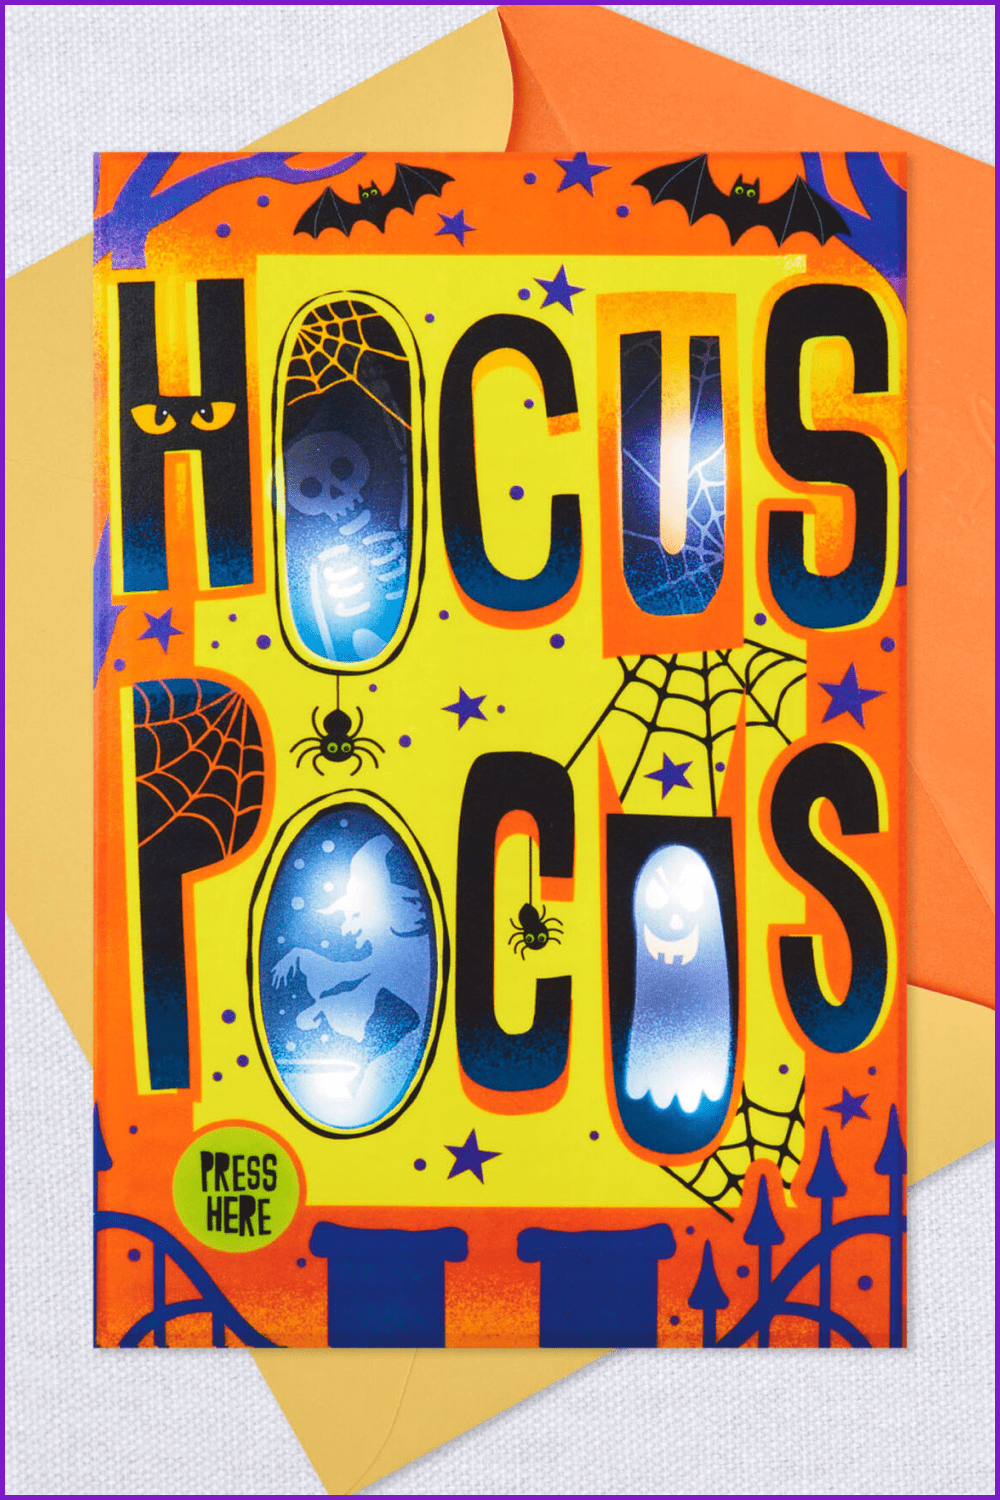 Yellow card with big sign Hocus Pocus.